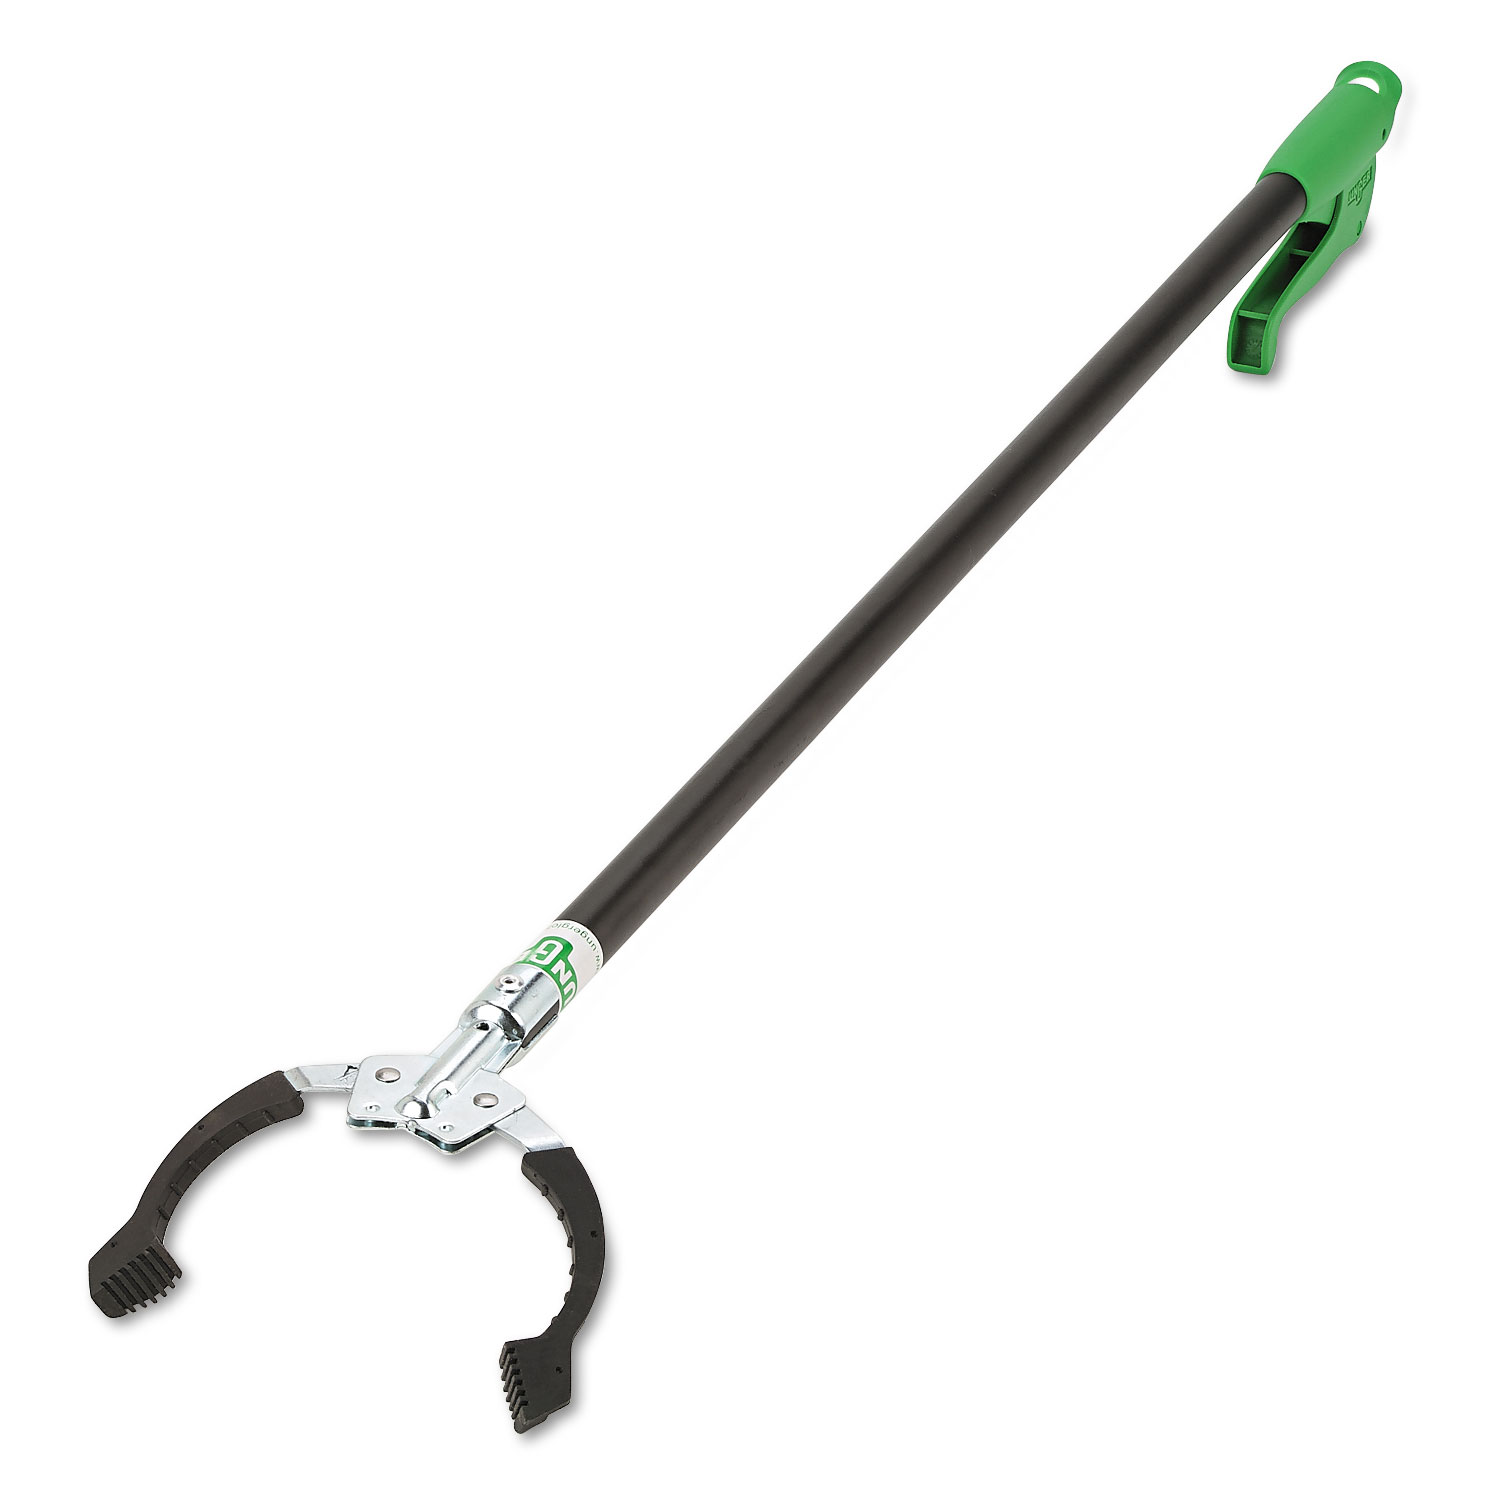  Unger NN900 Nifty Nabber Extension Arm w/Claw, 36, Black/Green (UNGNN900) 